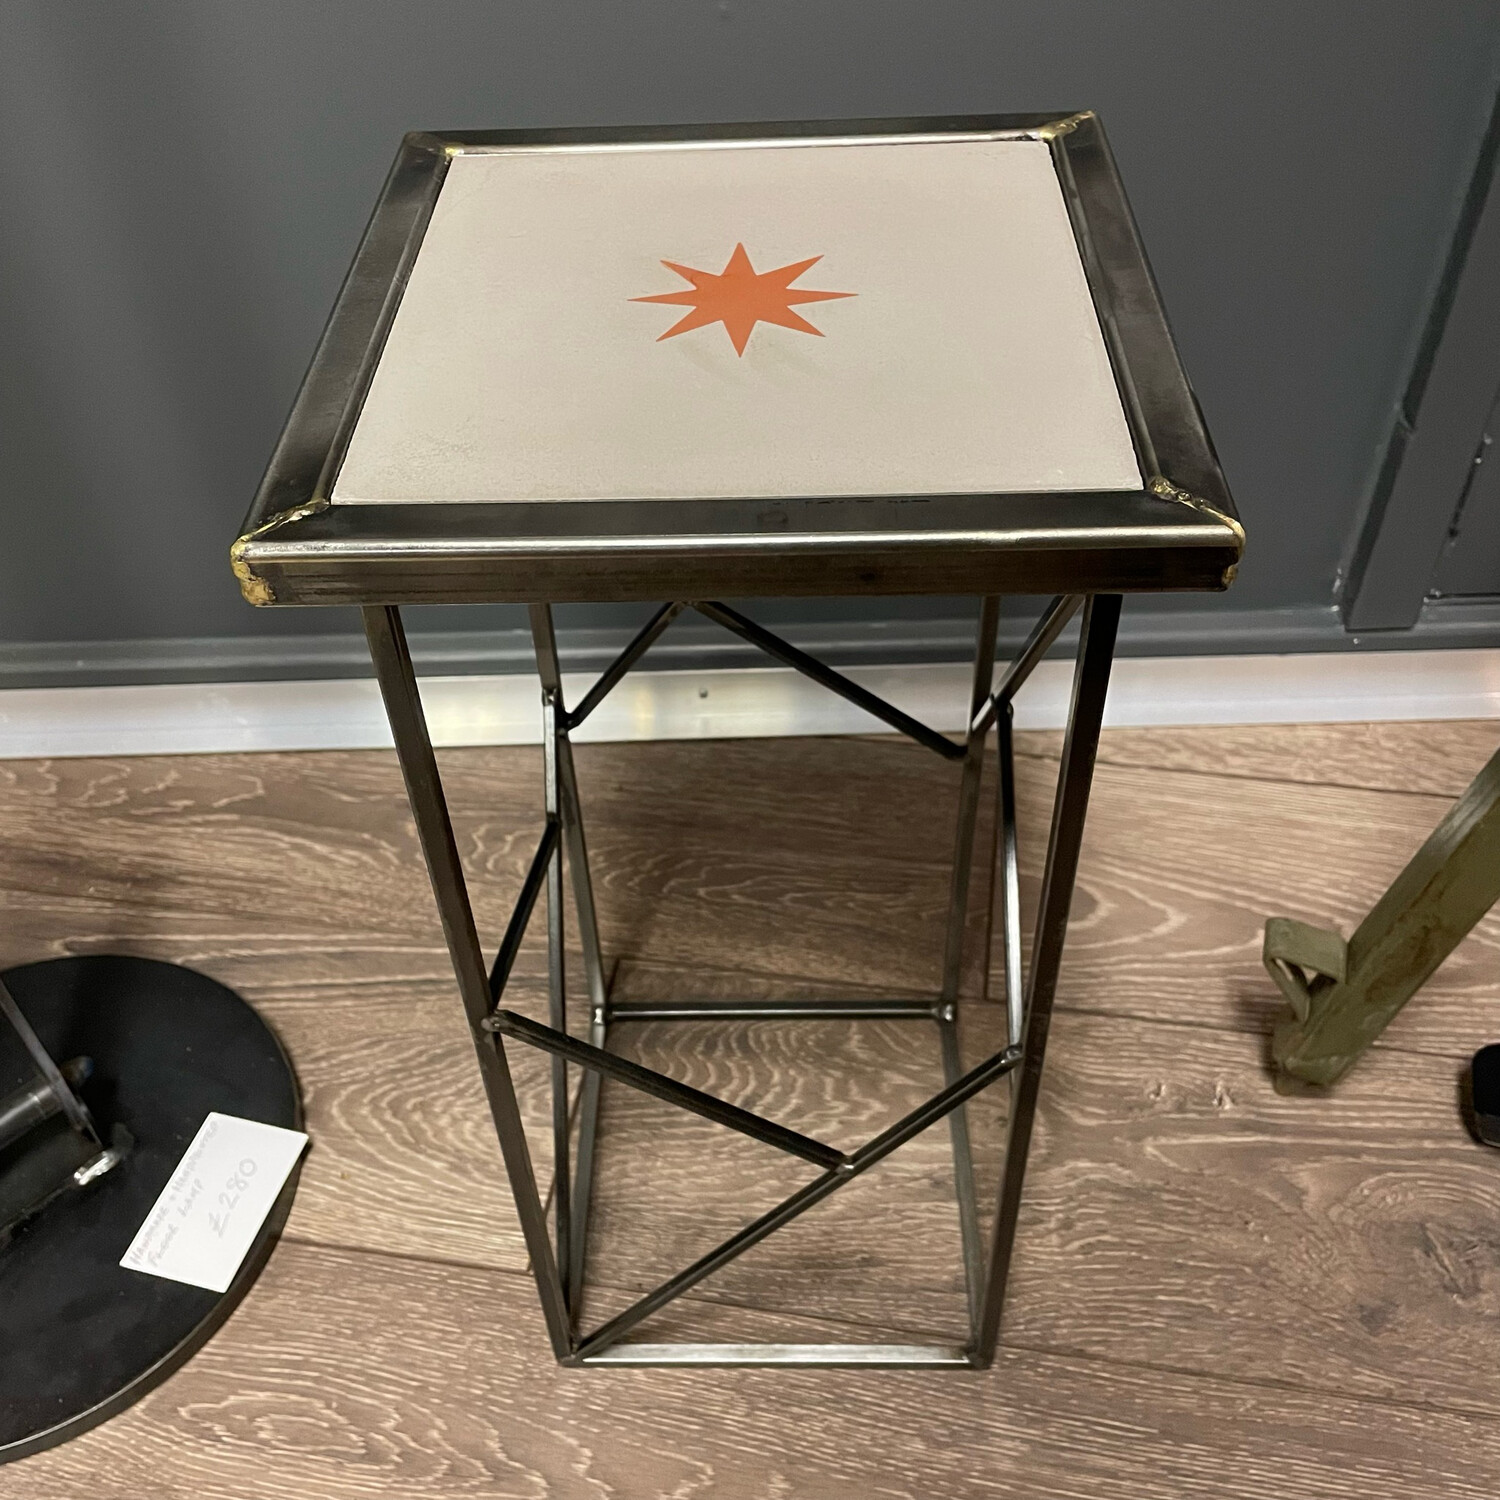 Steel Side Table With Encaustic Tile Top 